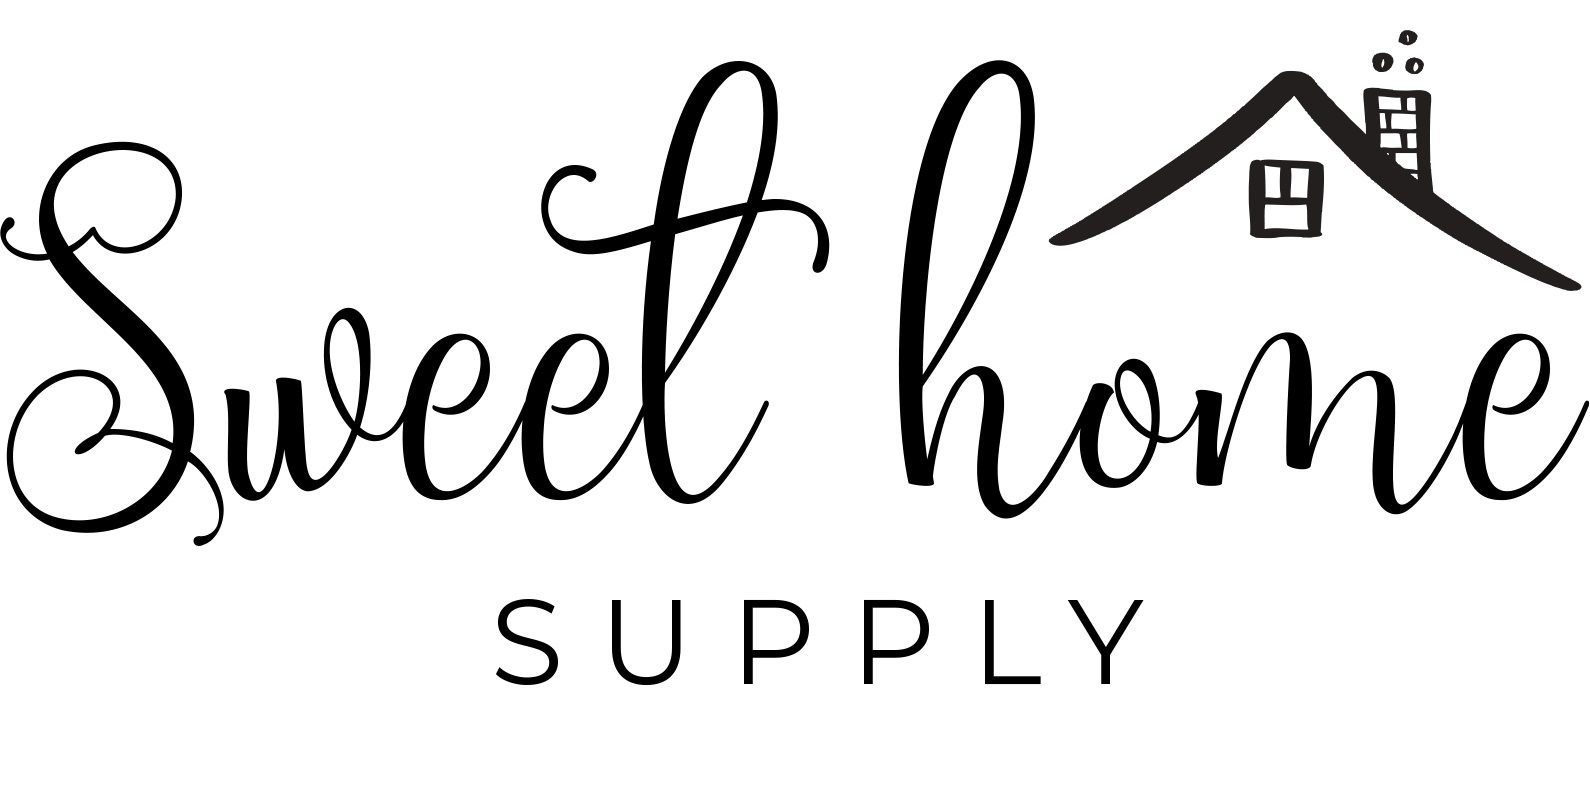 Sweet Home Supply